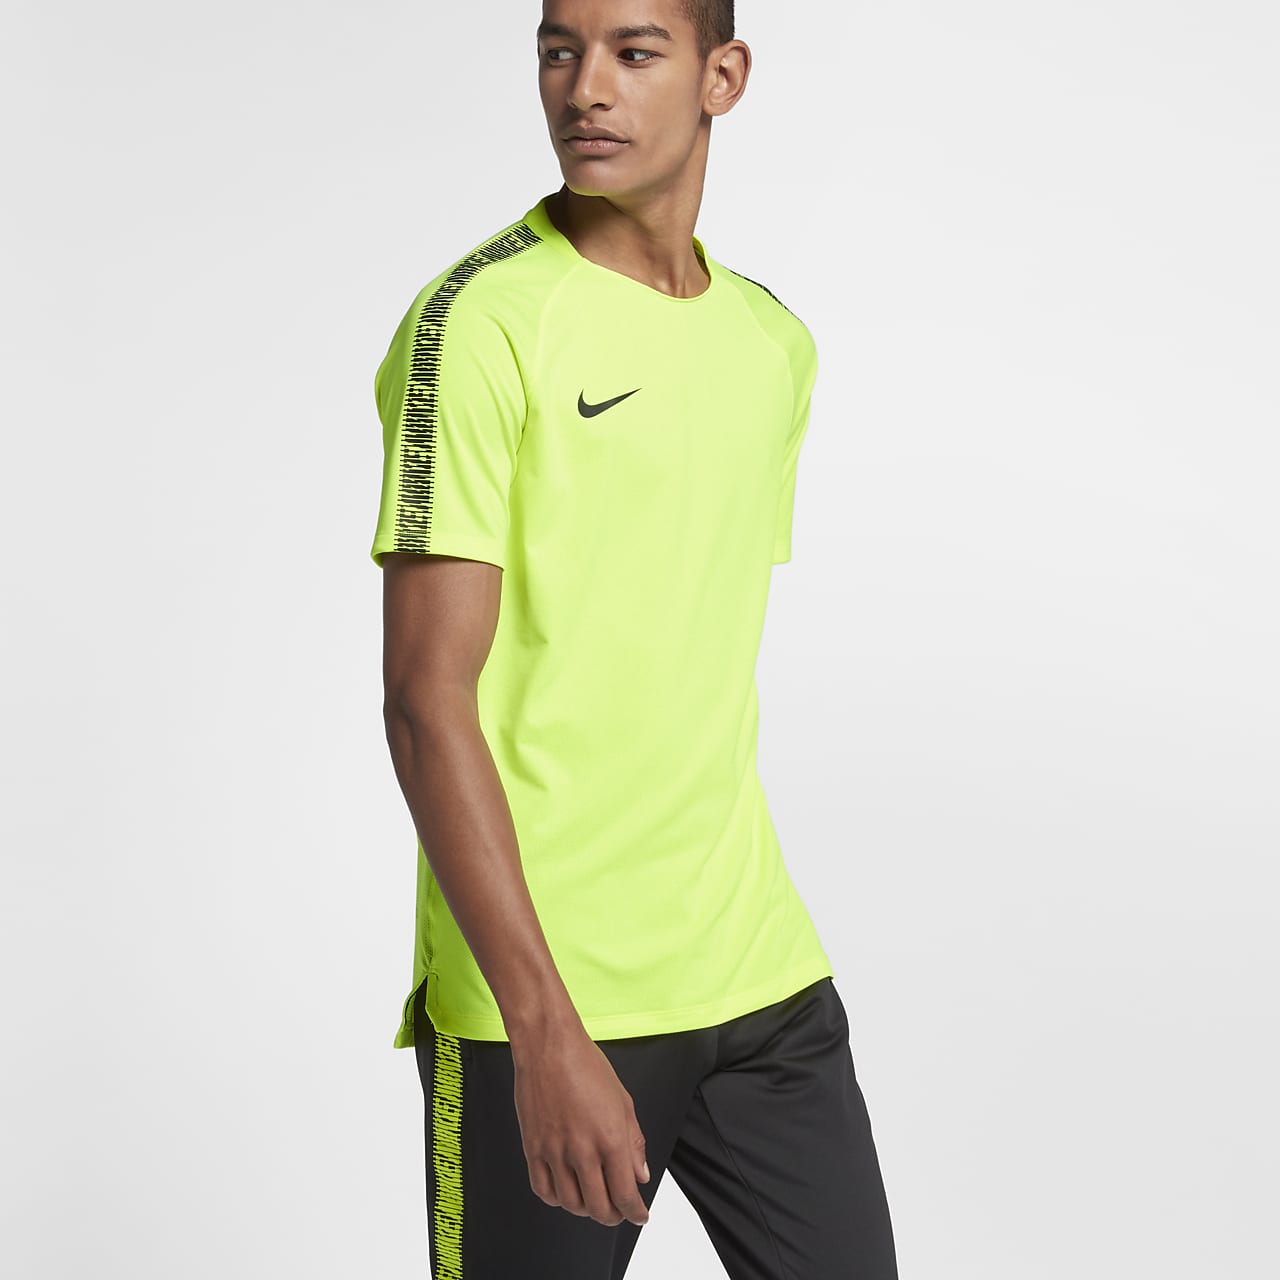 Discurso Persona a cargo Formación Nike Breathe Squad Men's Short-Sleeve Football Top. Nike ID